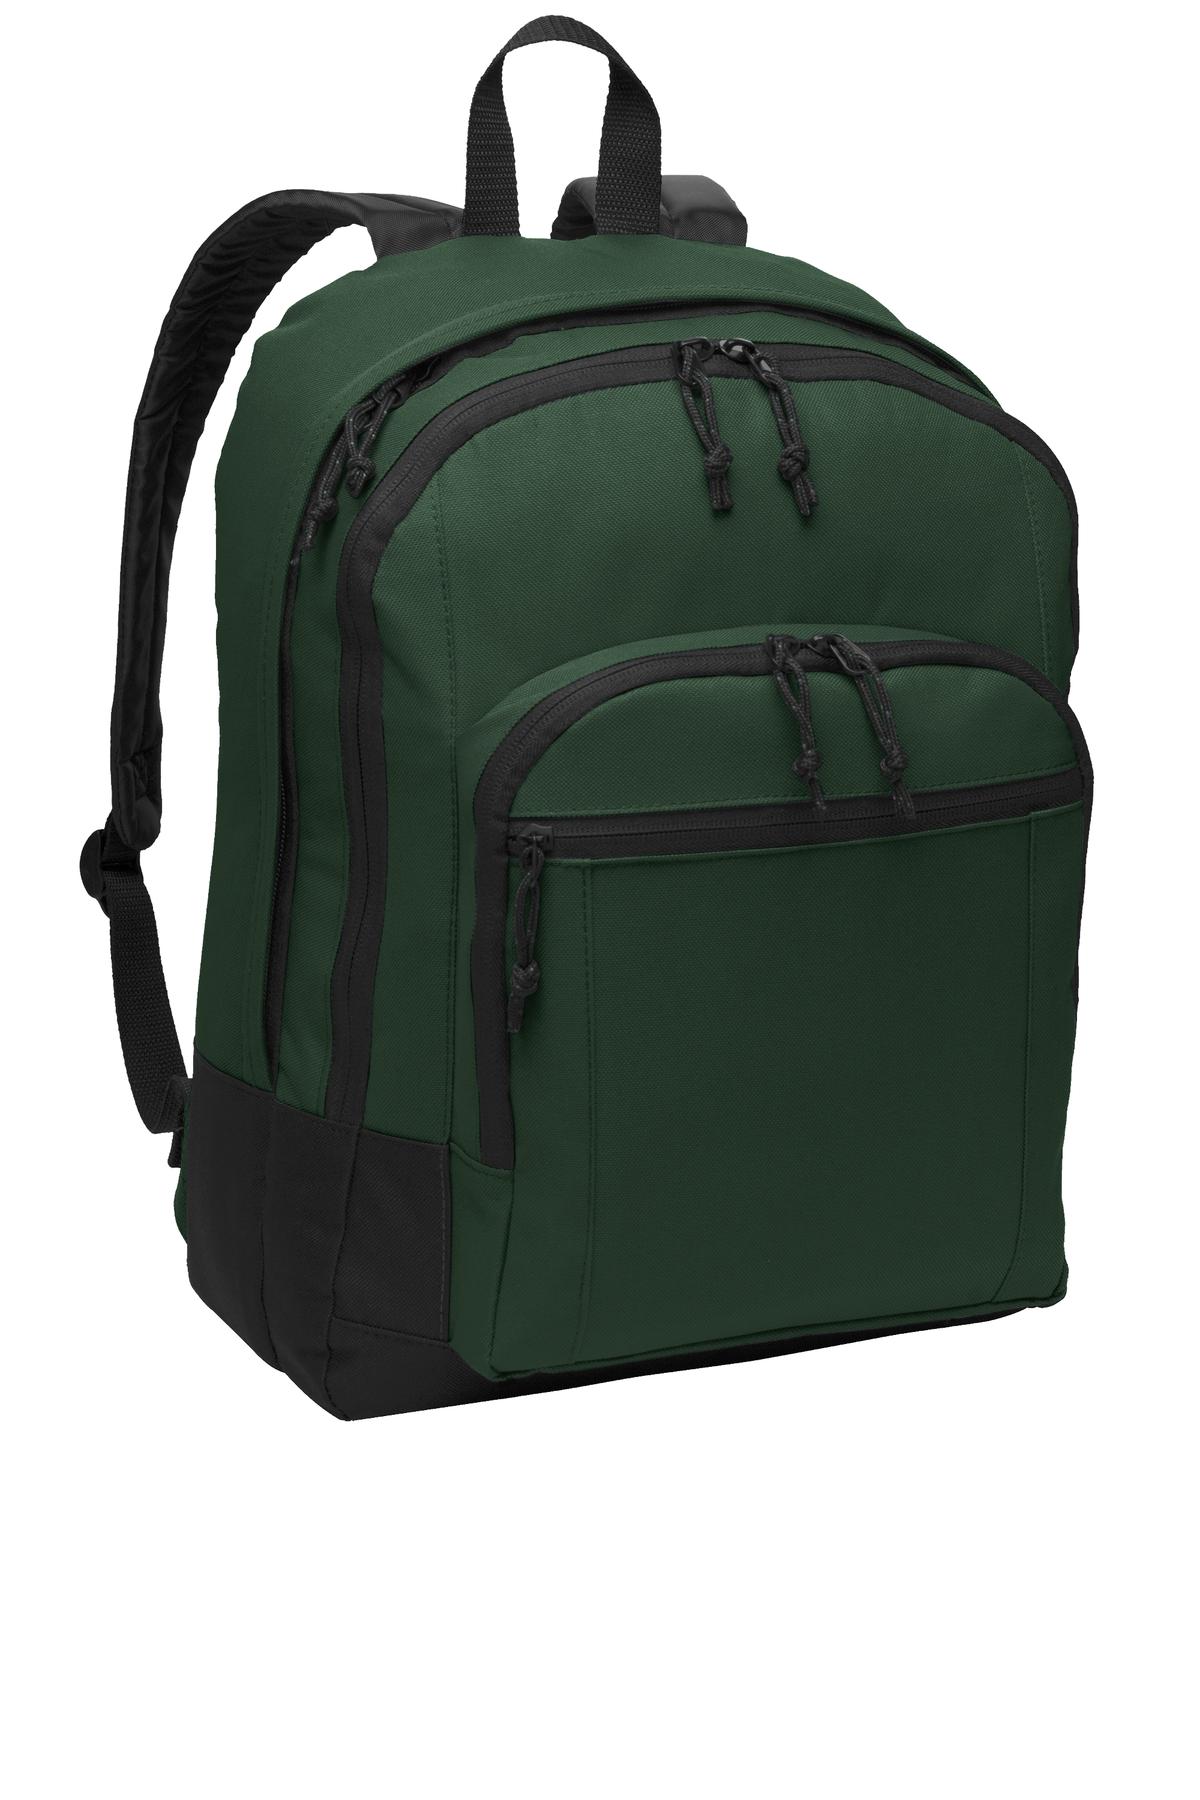 Port Authority® Basic Backpack. BG204